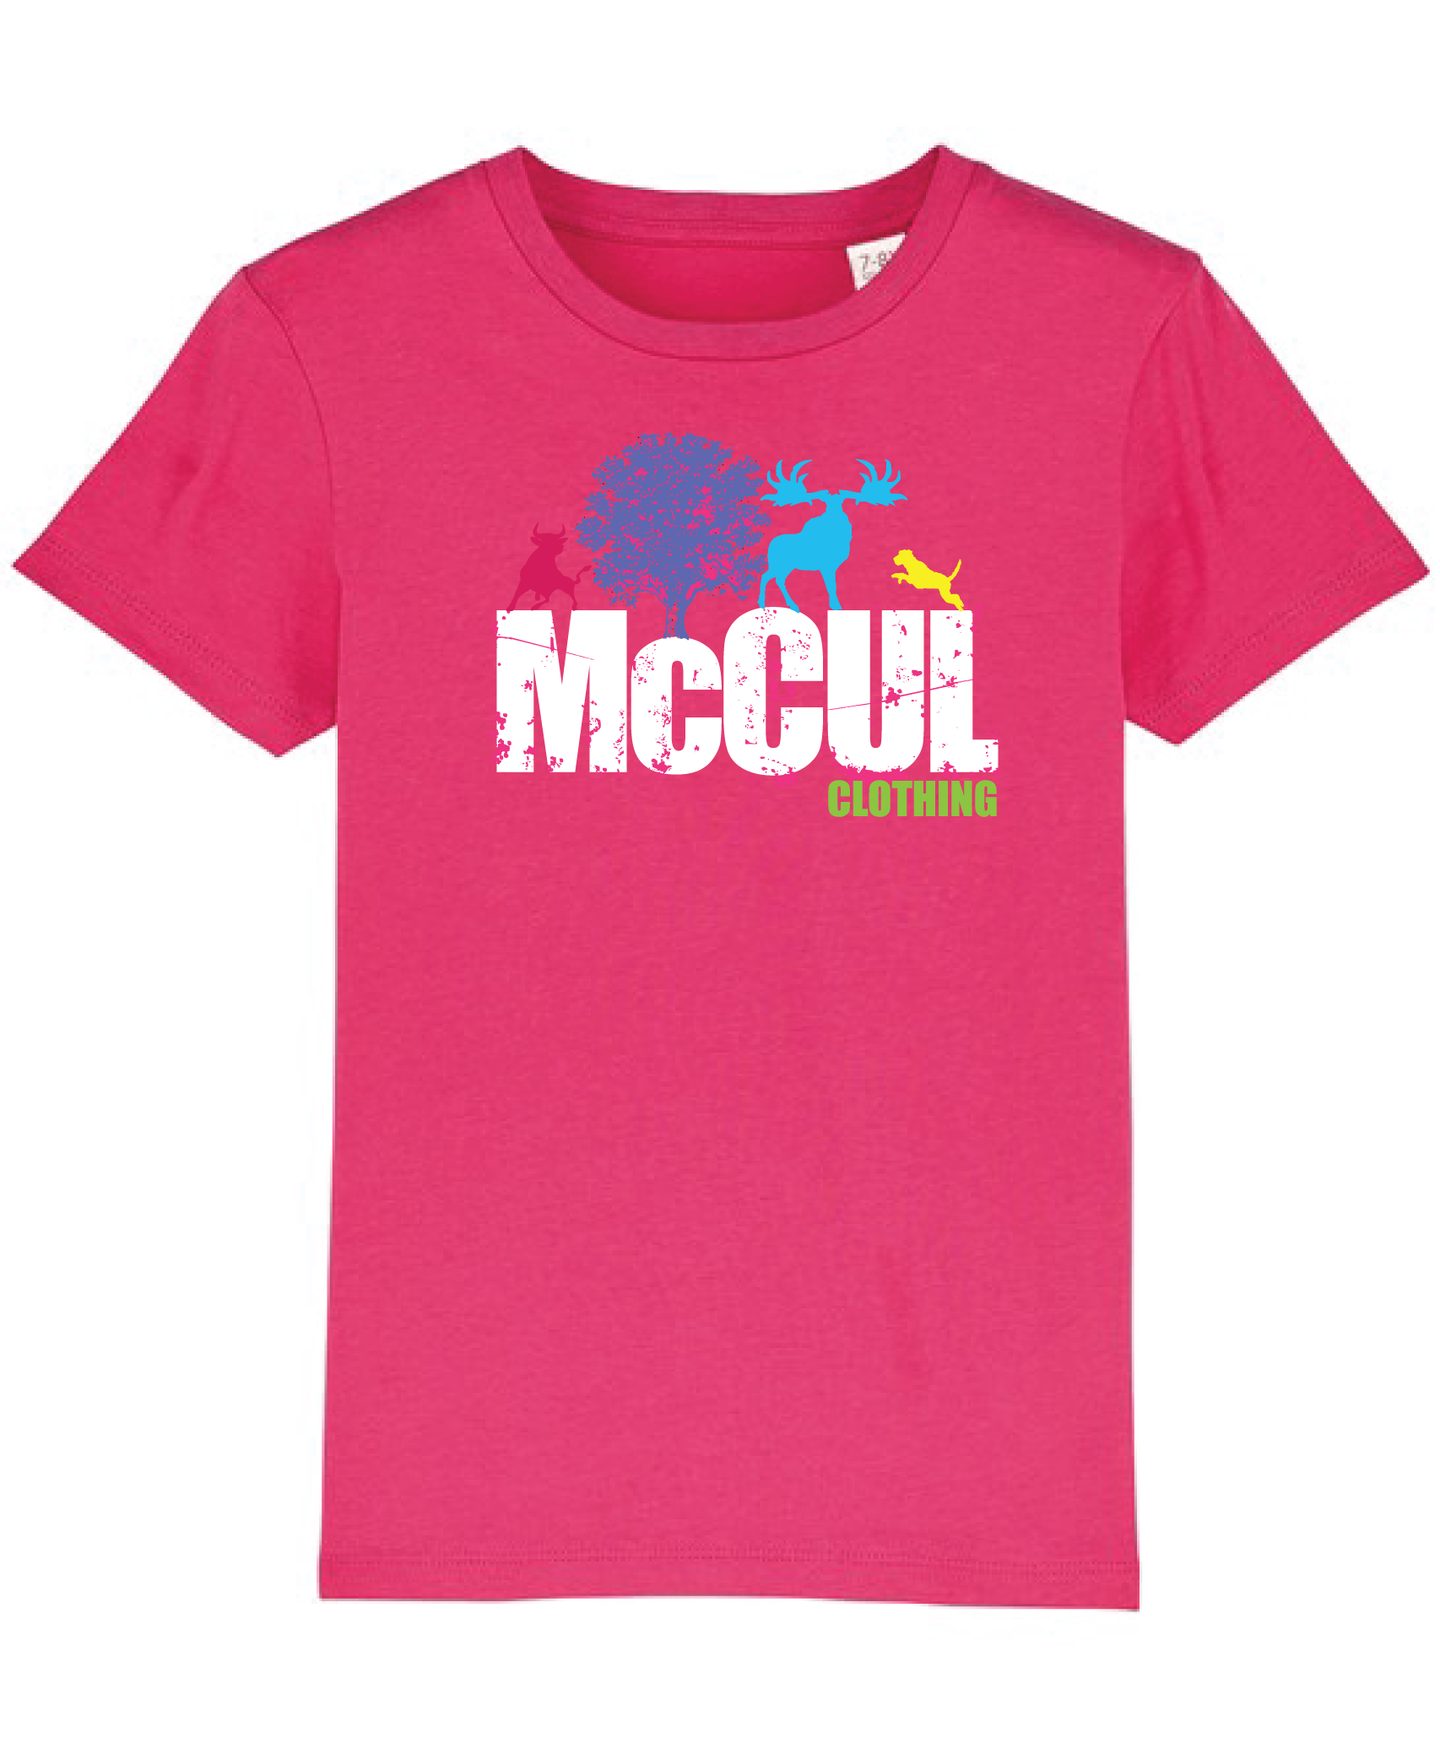 Girls New Raspberry Organic tee shirt with McCul print.